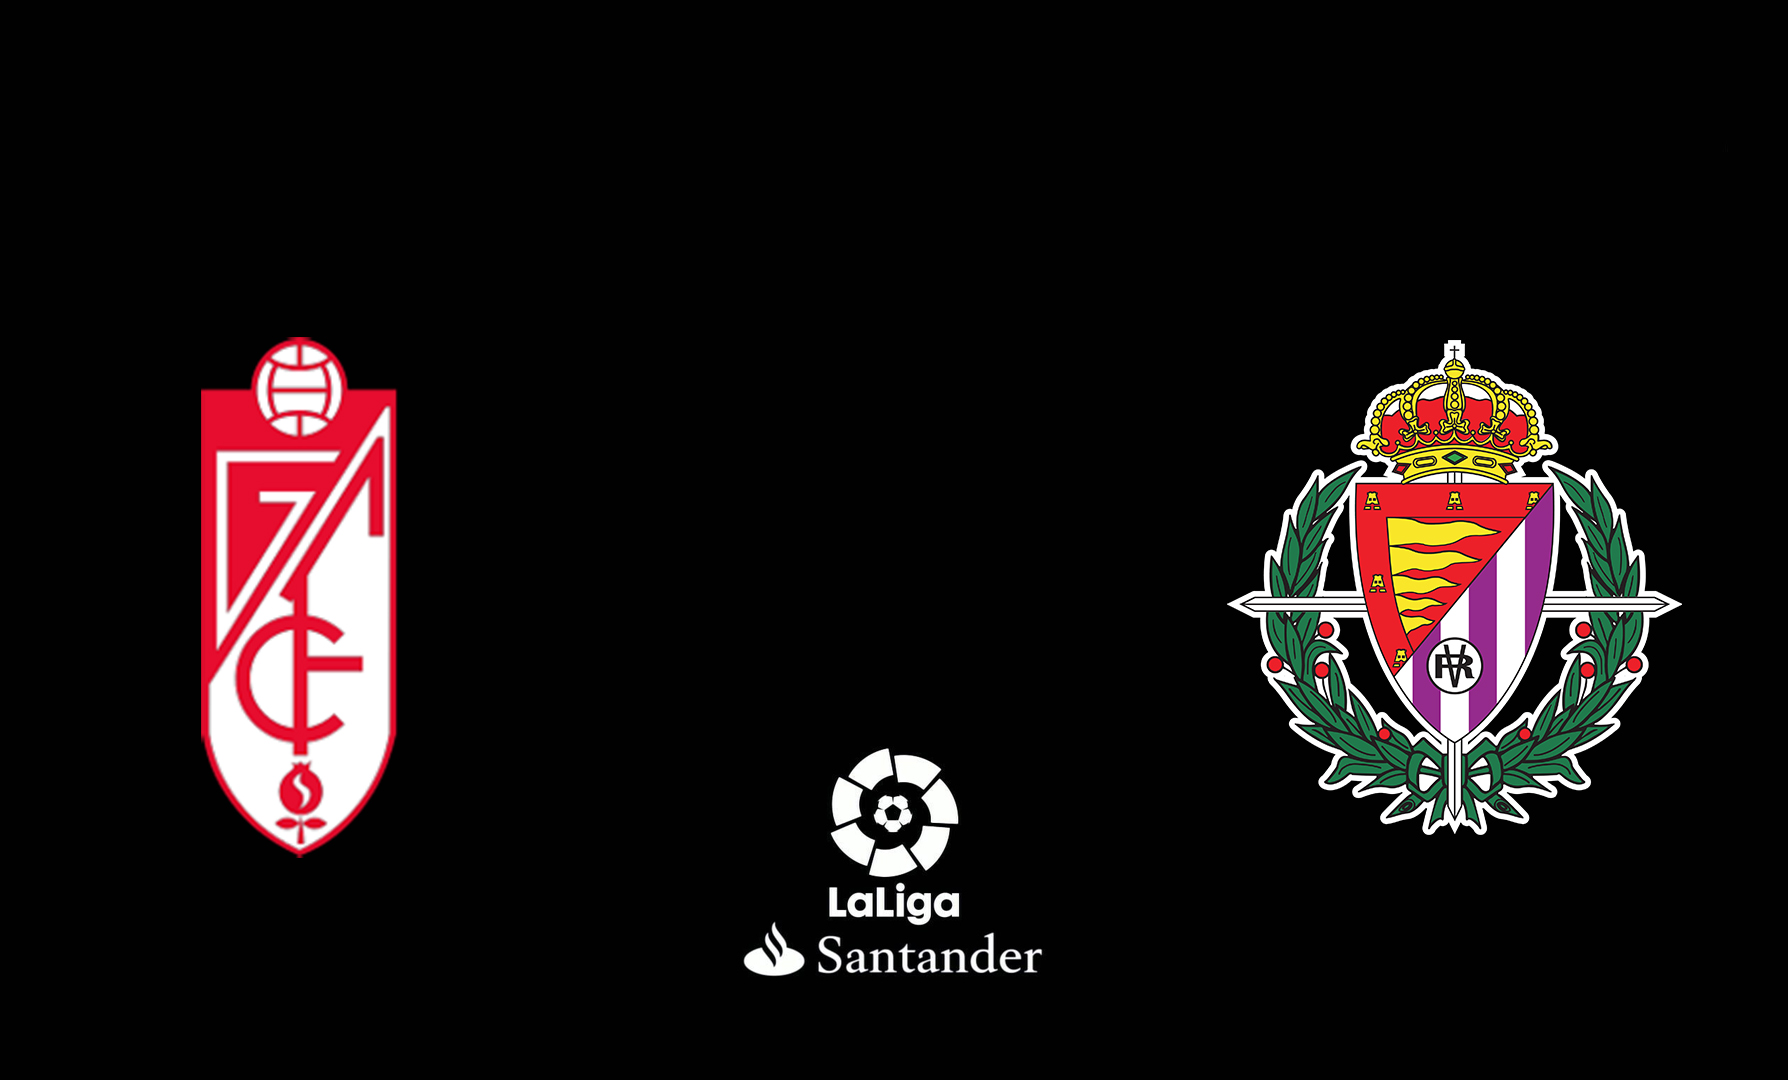 soi-keo-ca-cuoc-bong-da-ngay-9-2-Granada-vs-Valladolid-do-it-thang-do-nhieu-b9 1